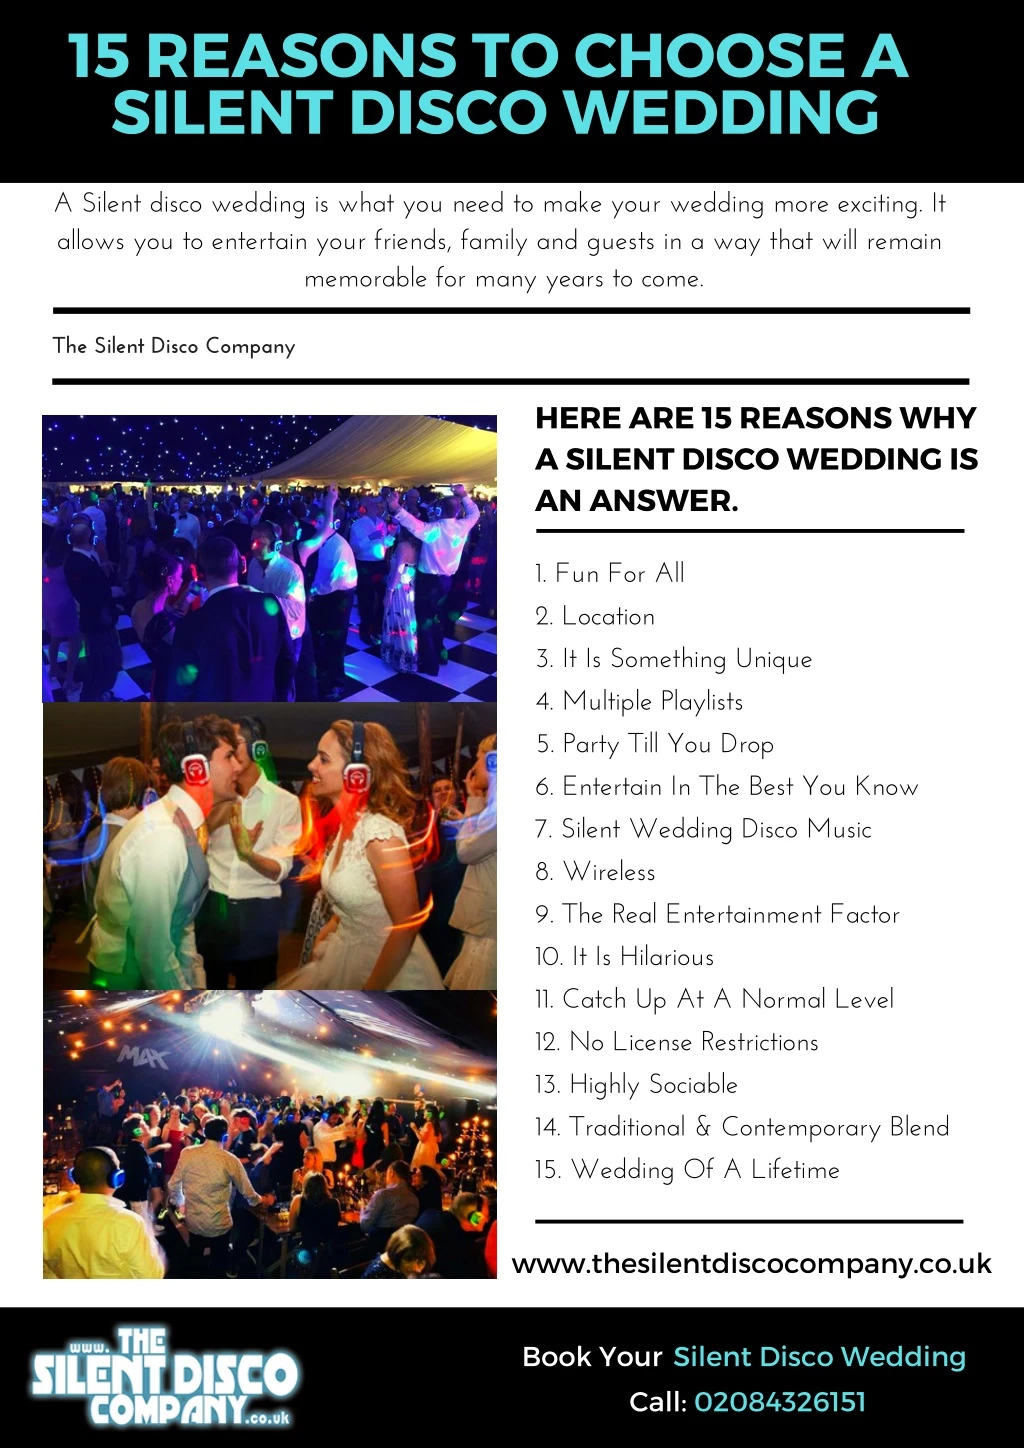 15 reasons to choose a silent disco wedding